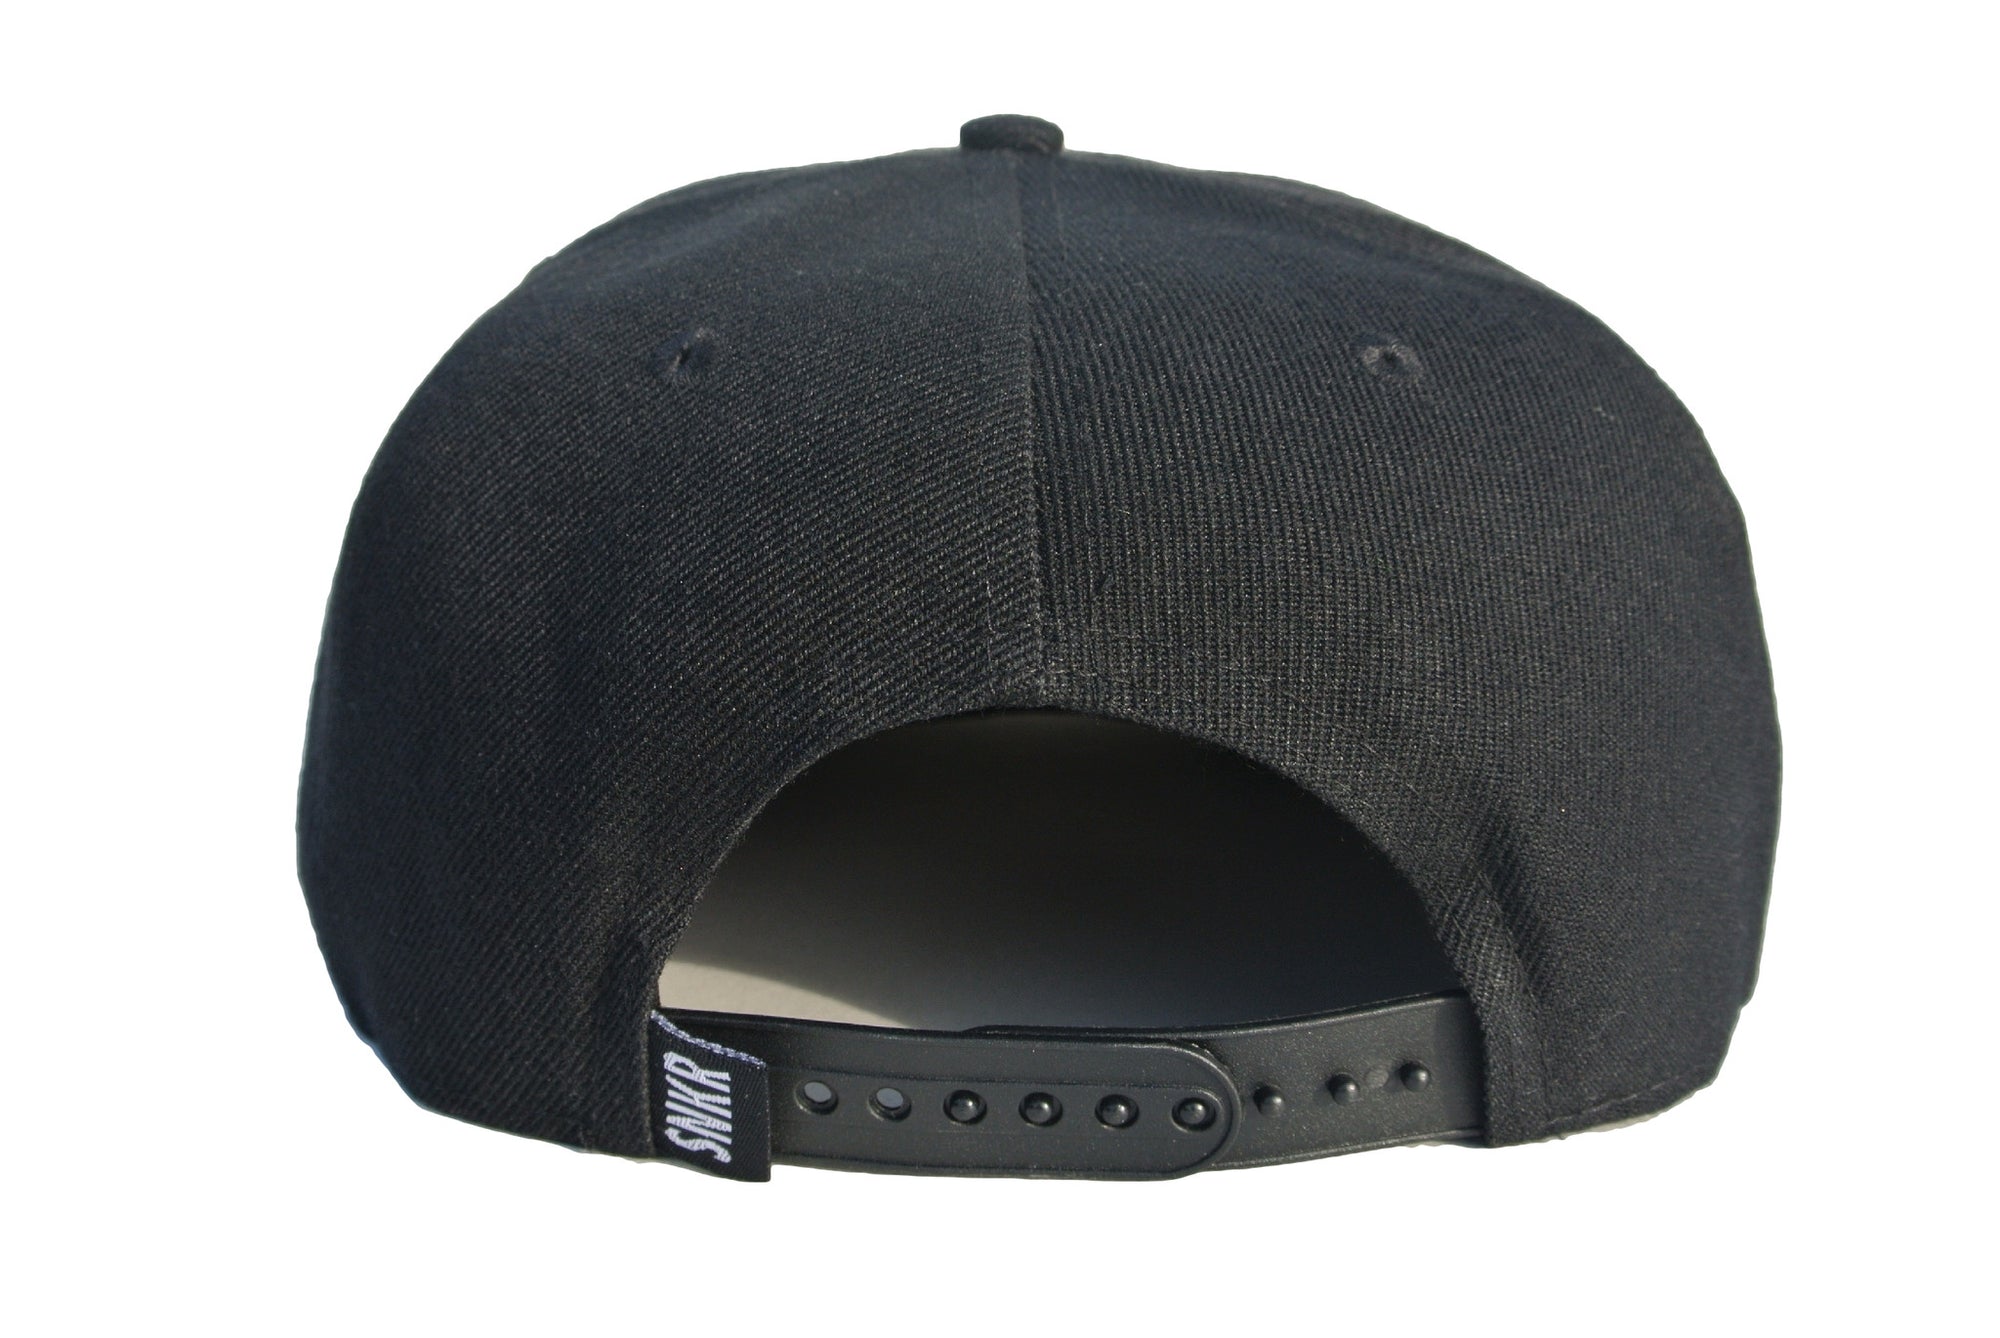 Sneaker Veteran Black Snapback Hat